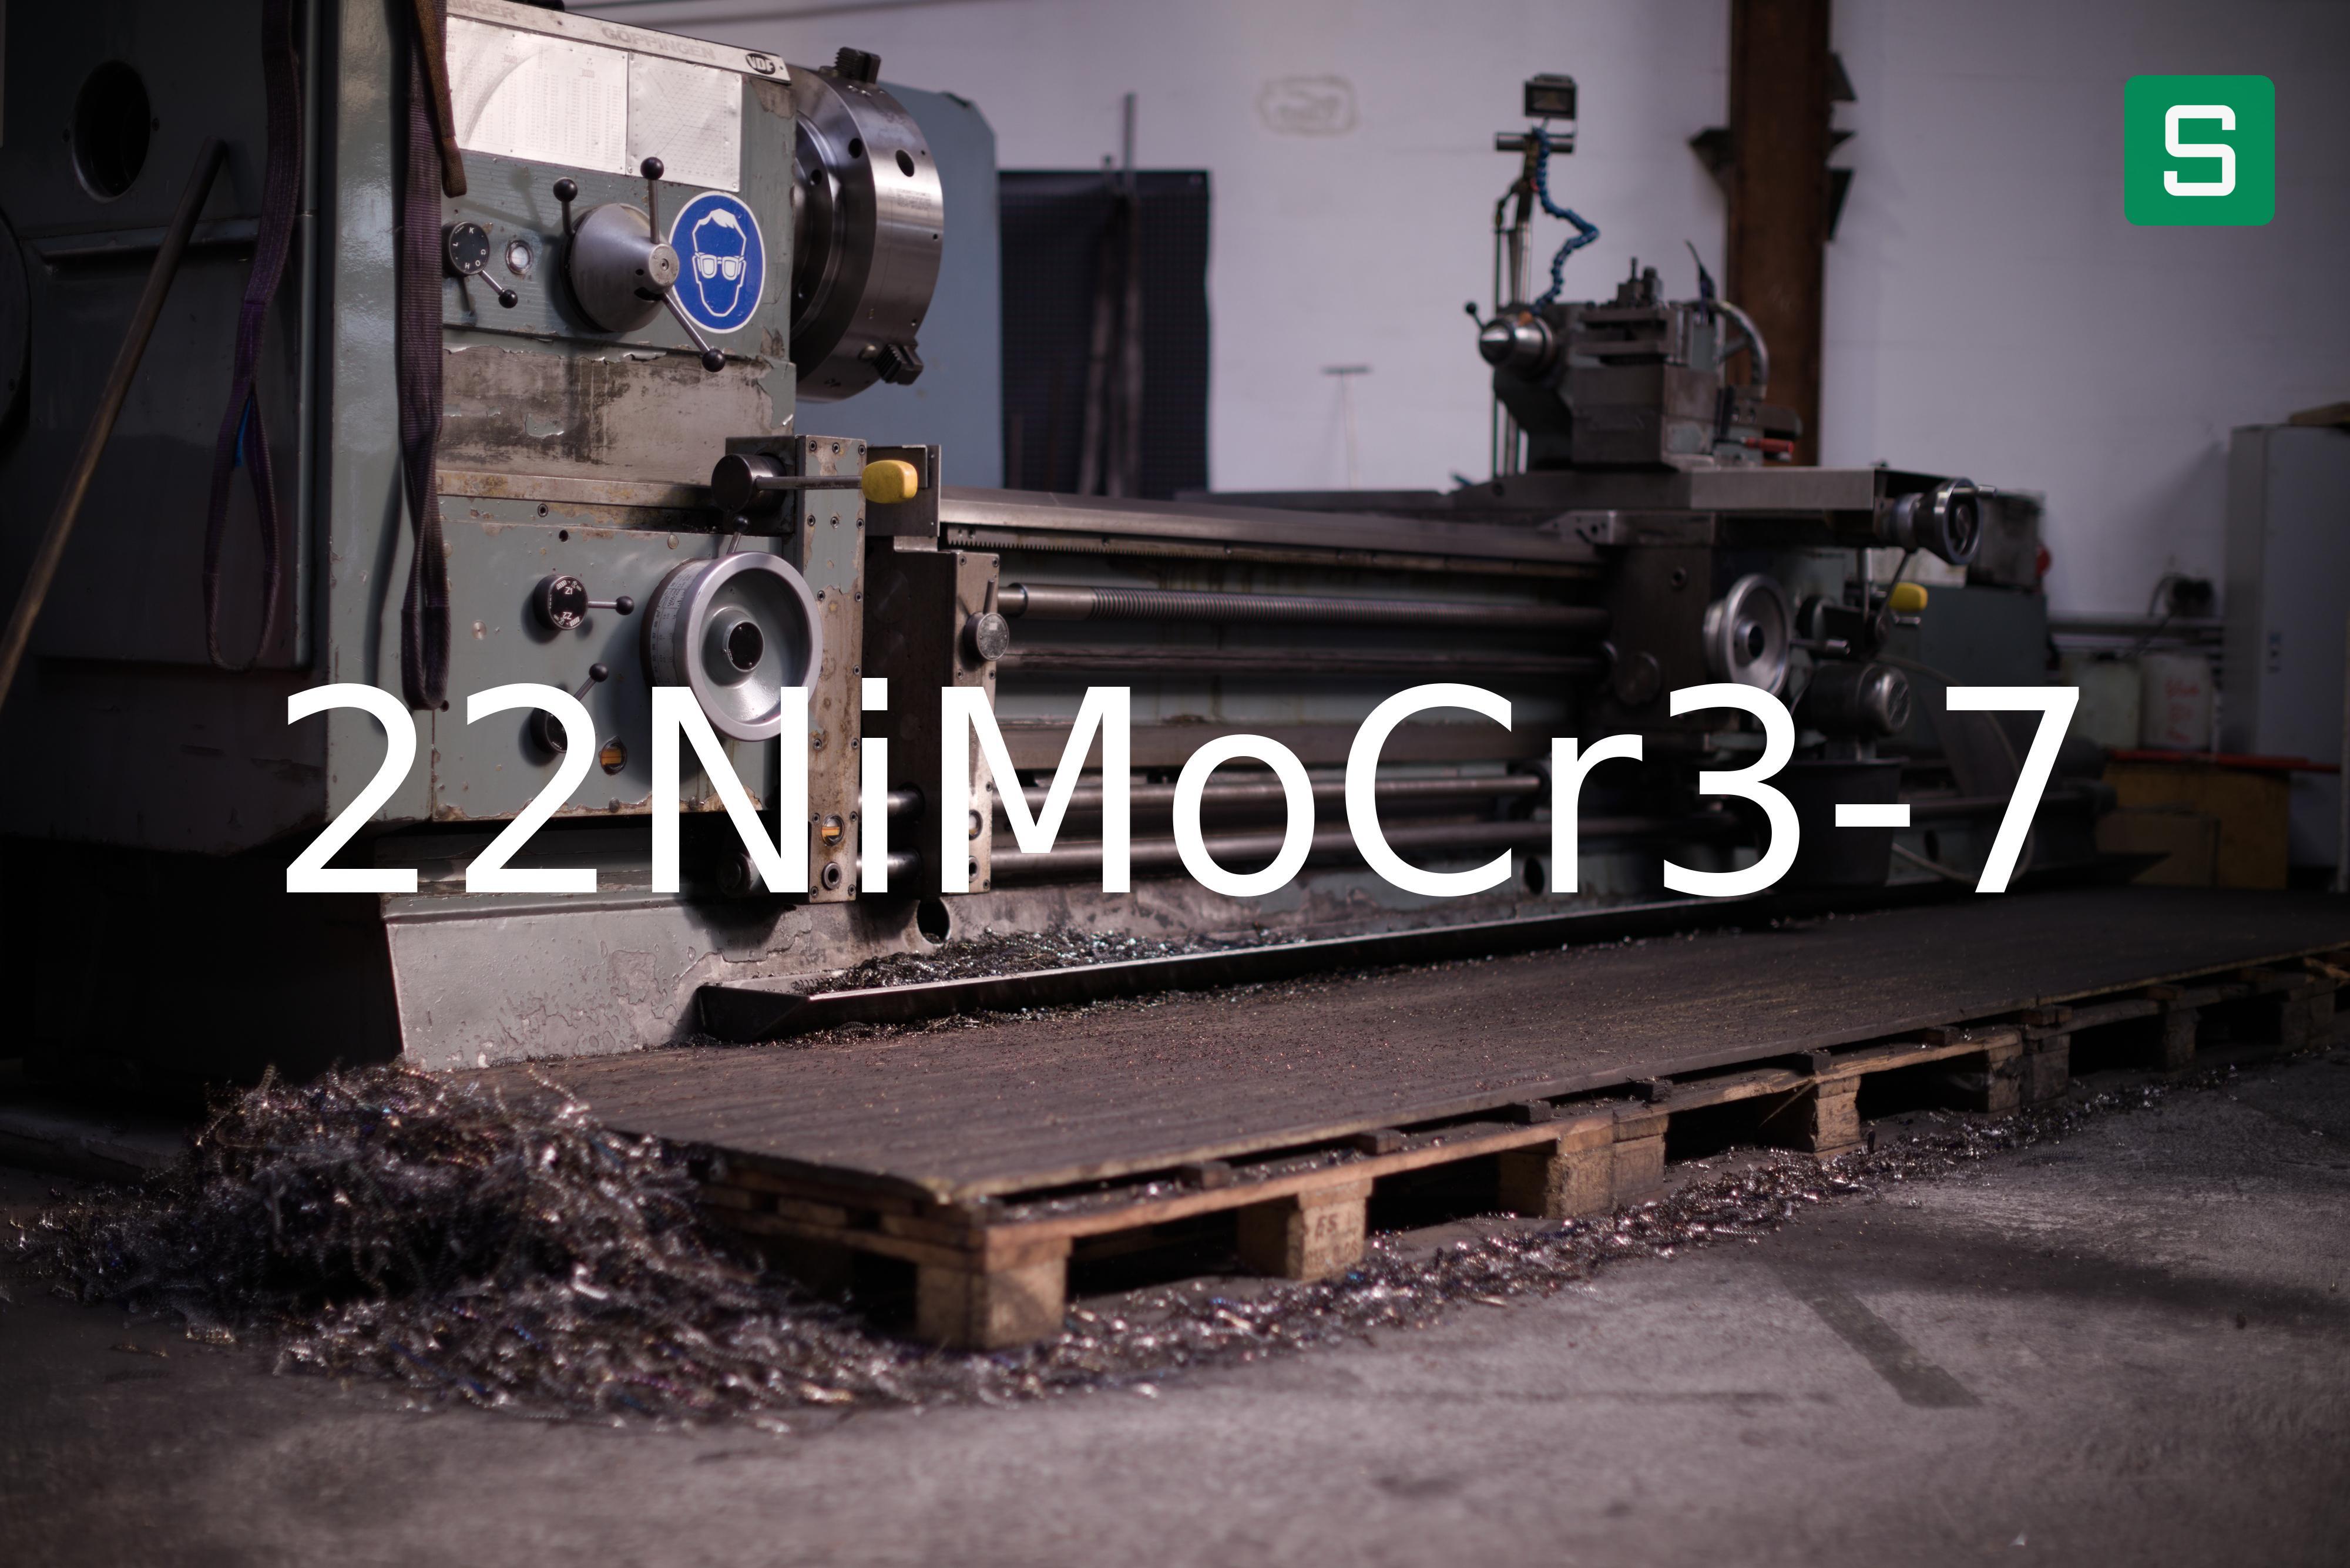 Steel Material: 22NiMoCr3-7